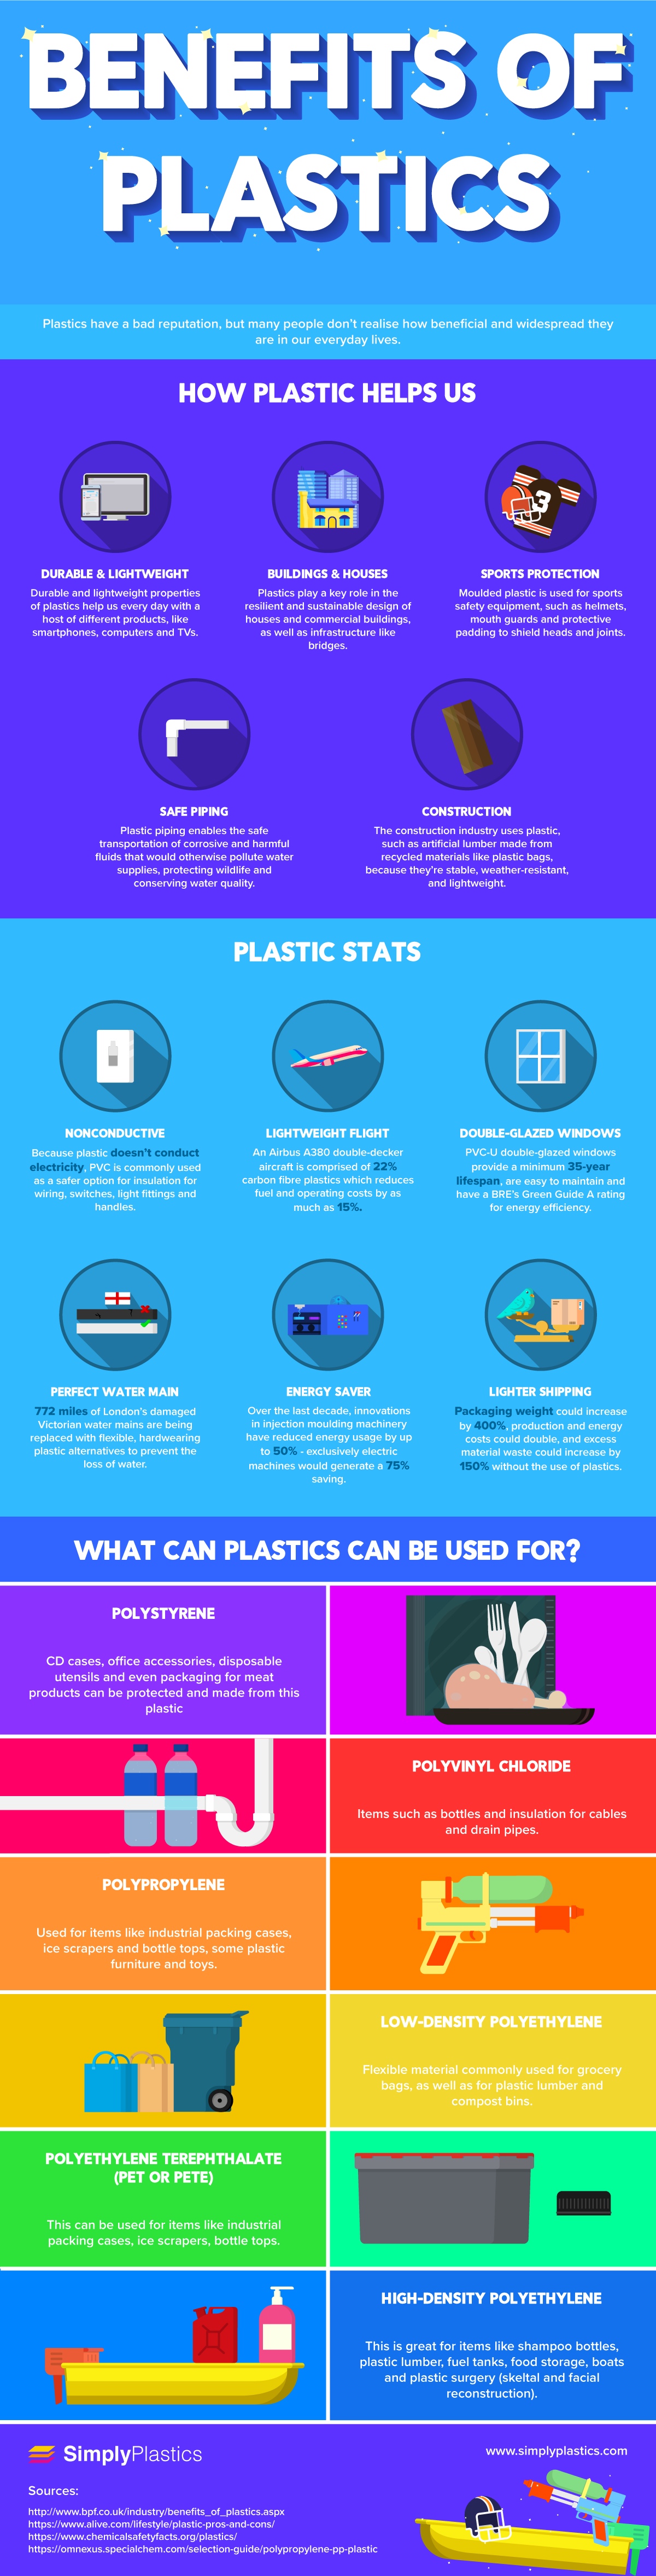 Benefits-of-Plastics